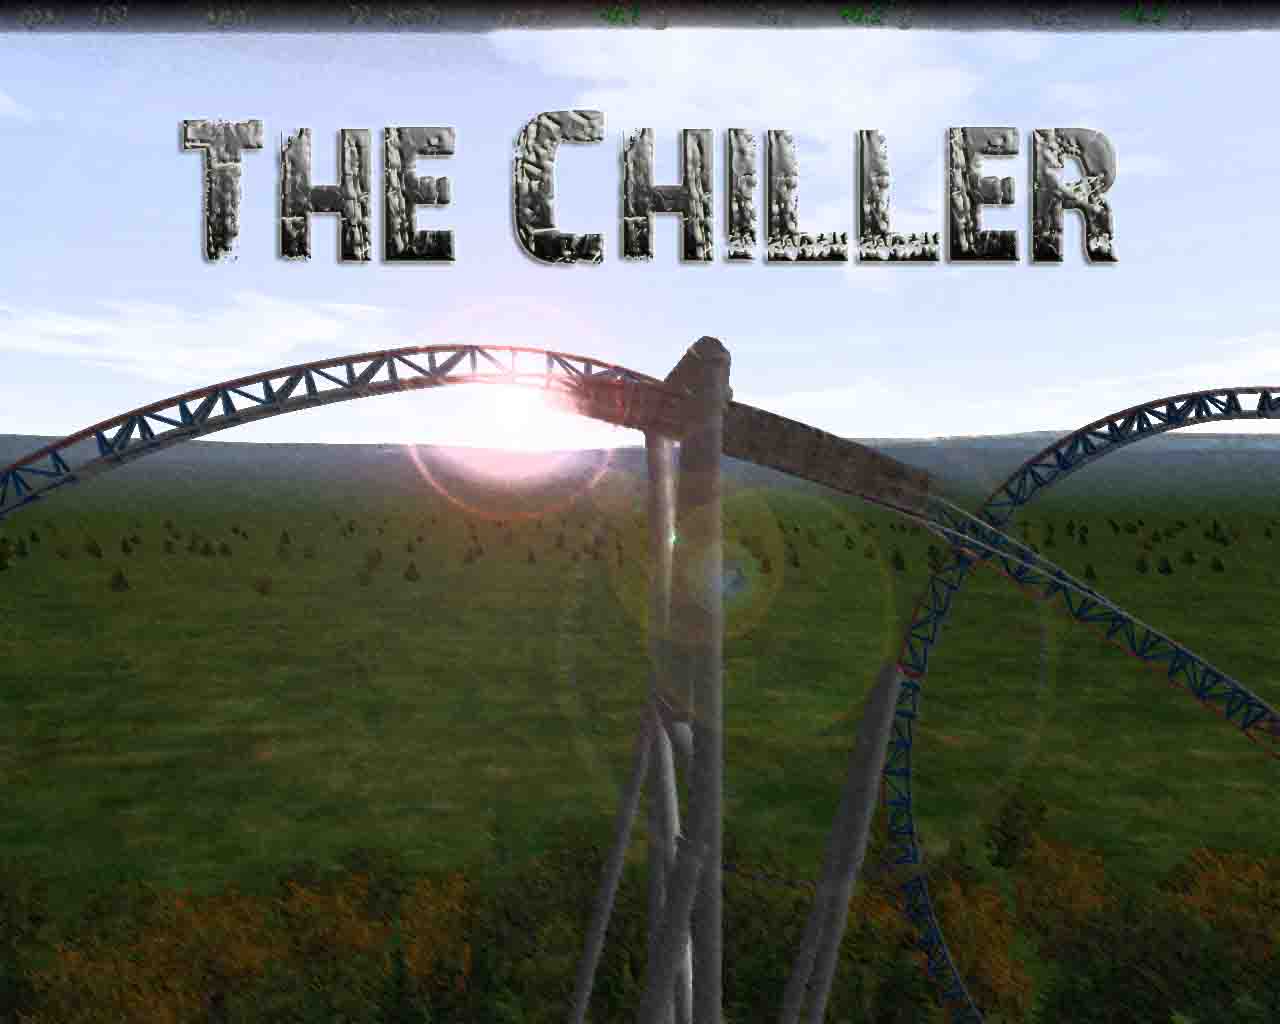 The Chiller_by_Tigereye